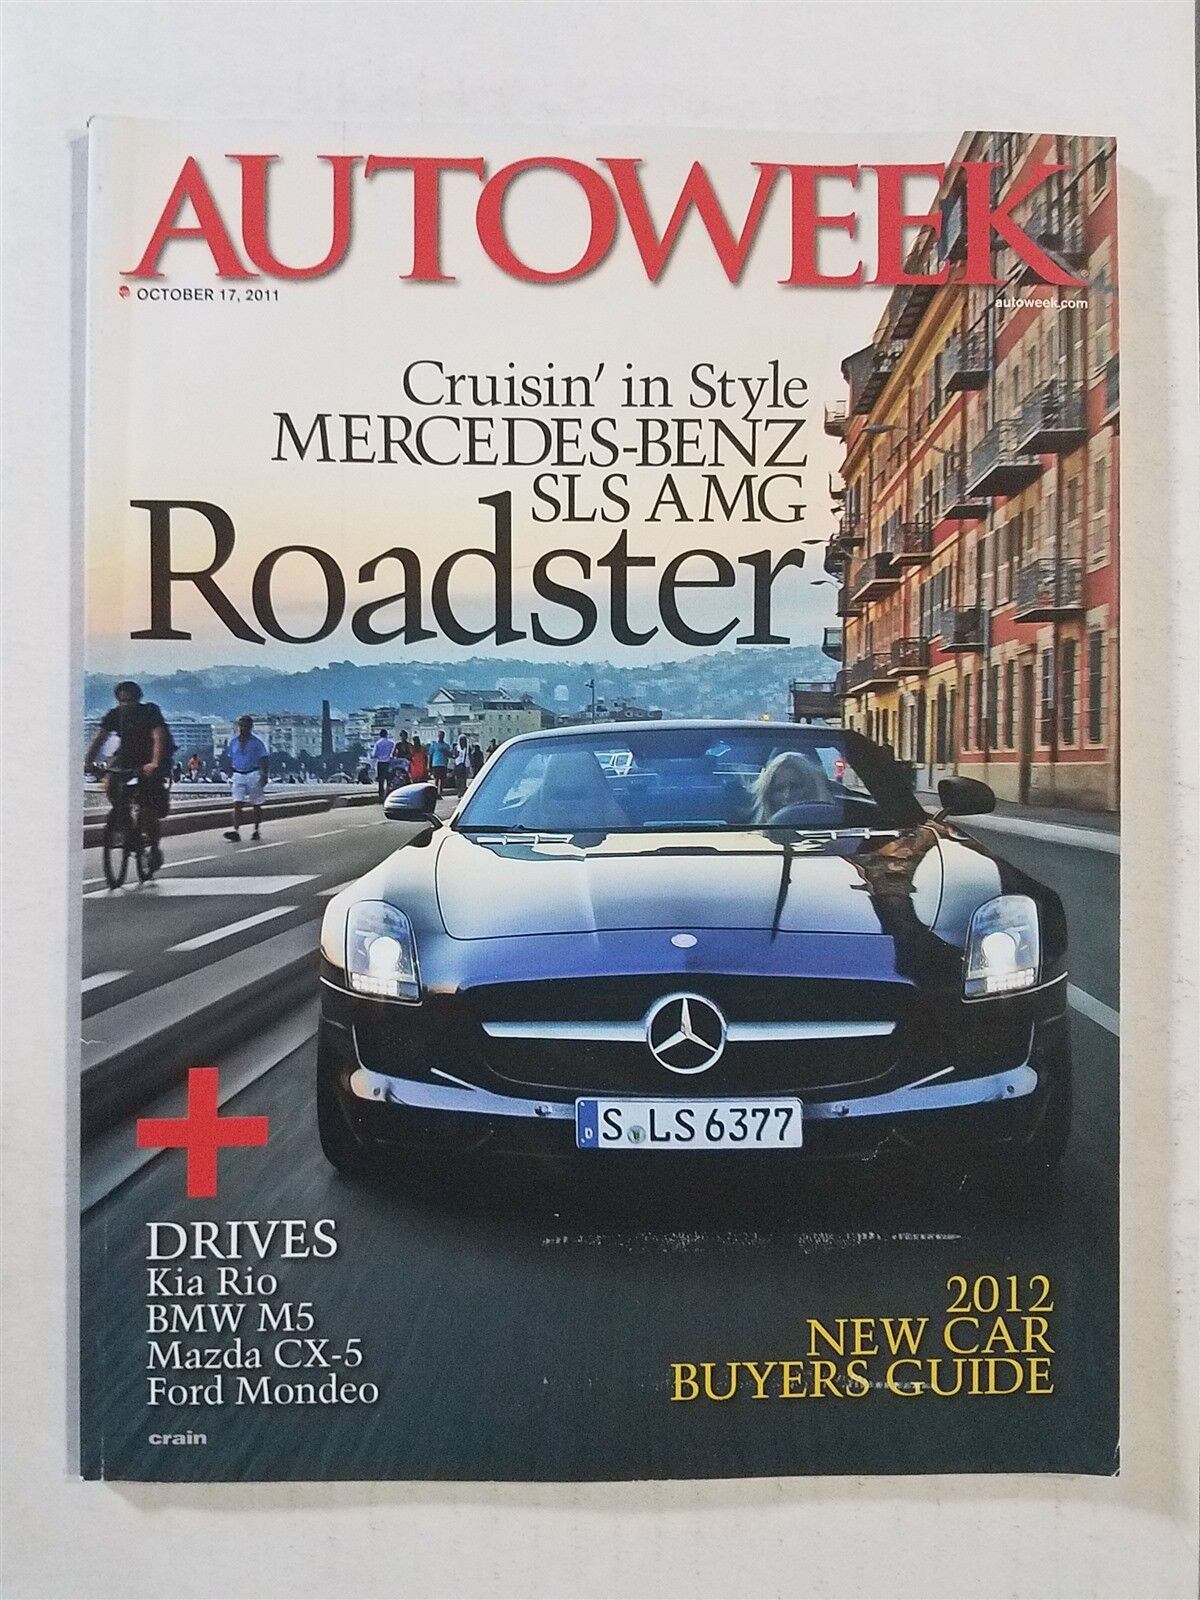 Auto Week Magazine October 17, 2011 2012 Buyers Guide BMW M5 - Mercedes SLS AMG